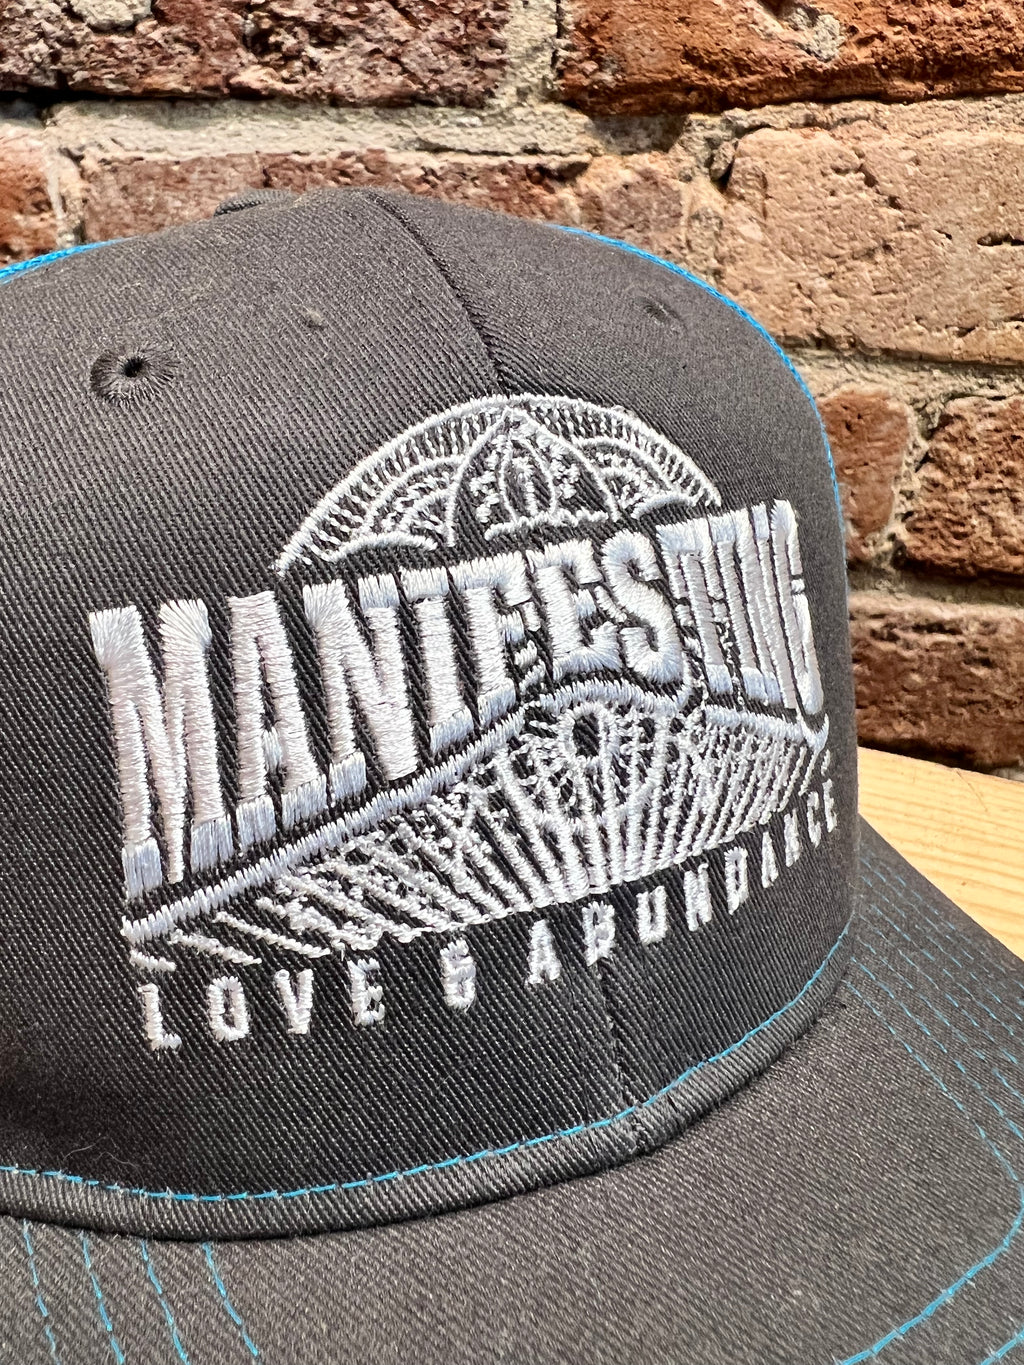 Manifesting Truckers Hat - thepaisleyfig